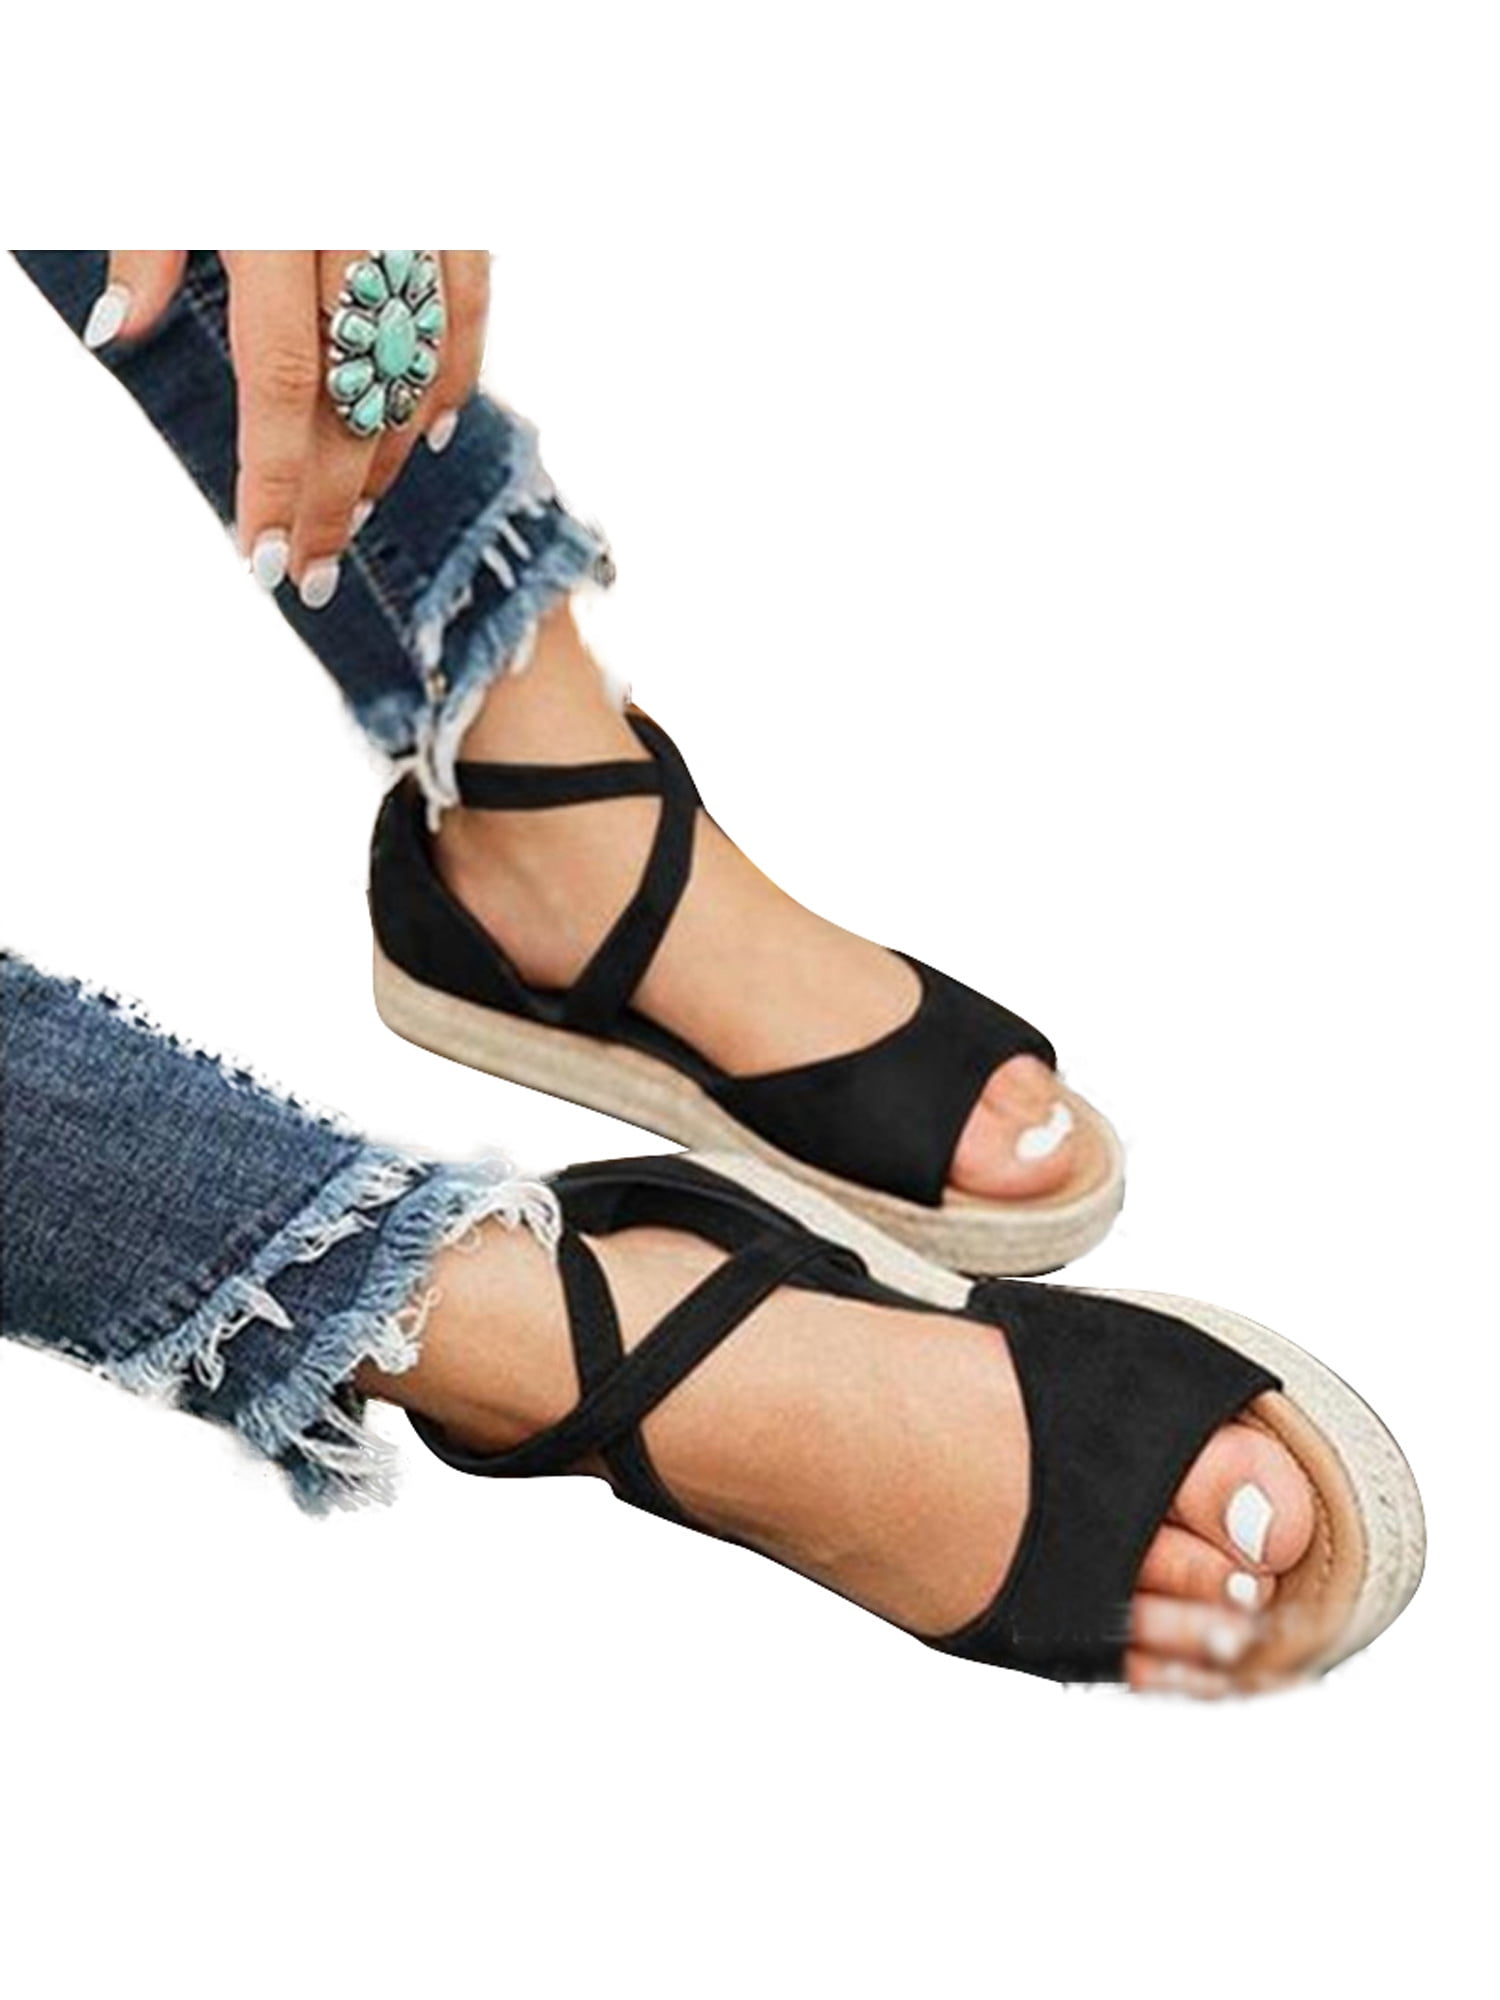 New Womens Flat Shoes Espadrilles Summer Holidays Beach Sandal Ladies Black